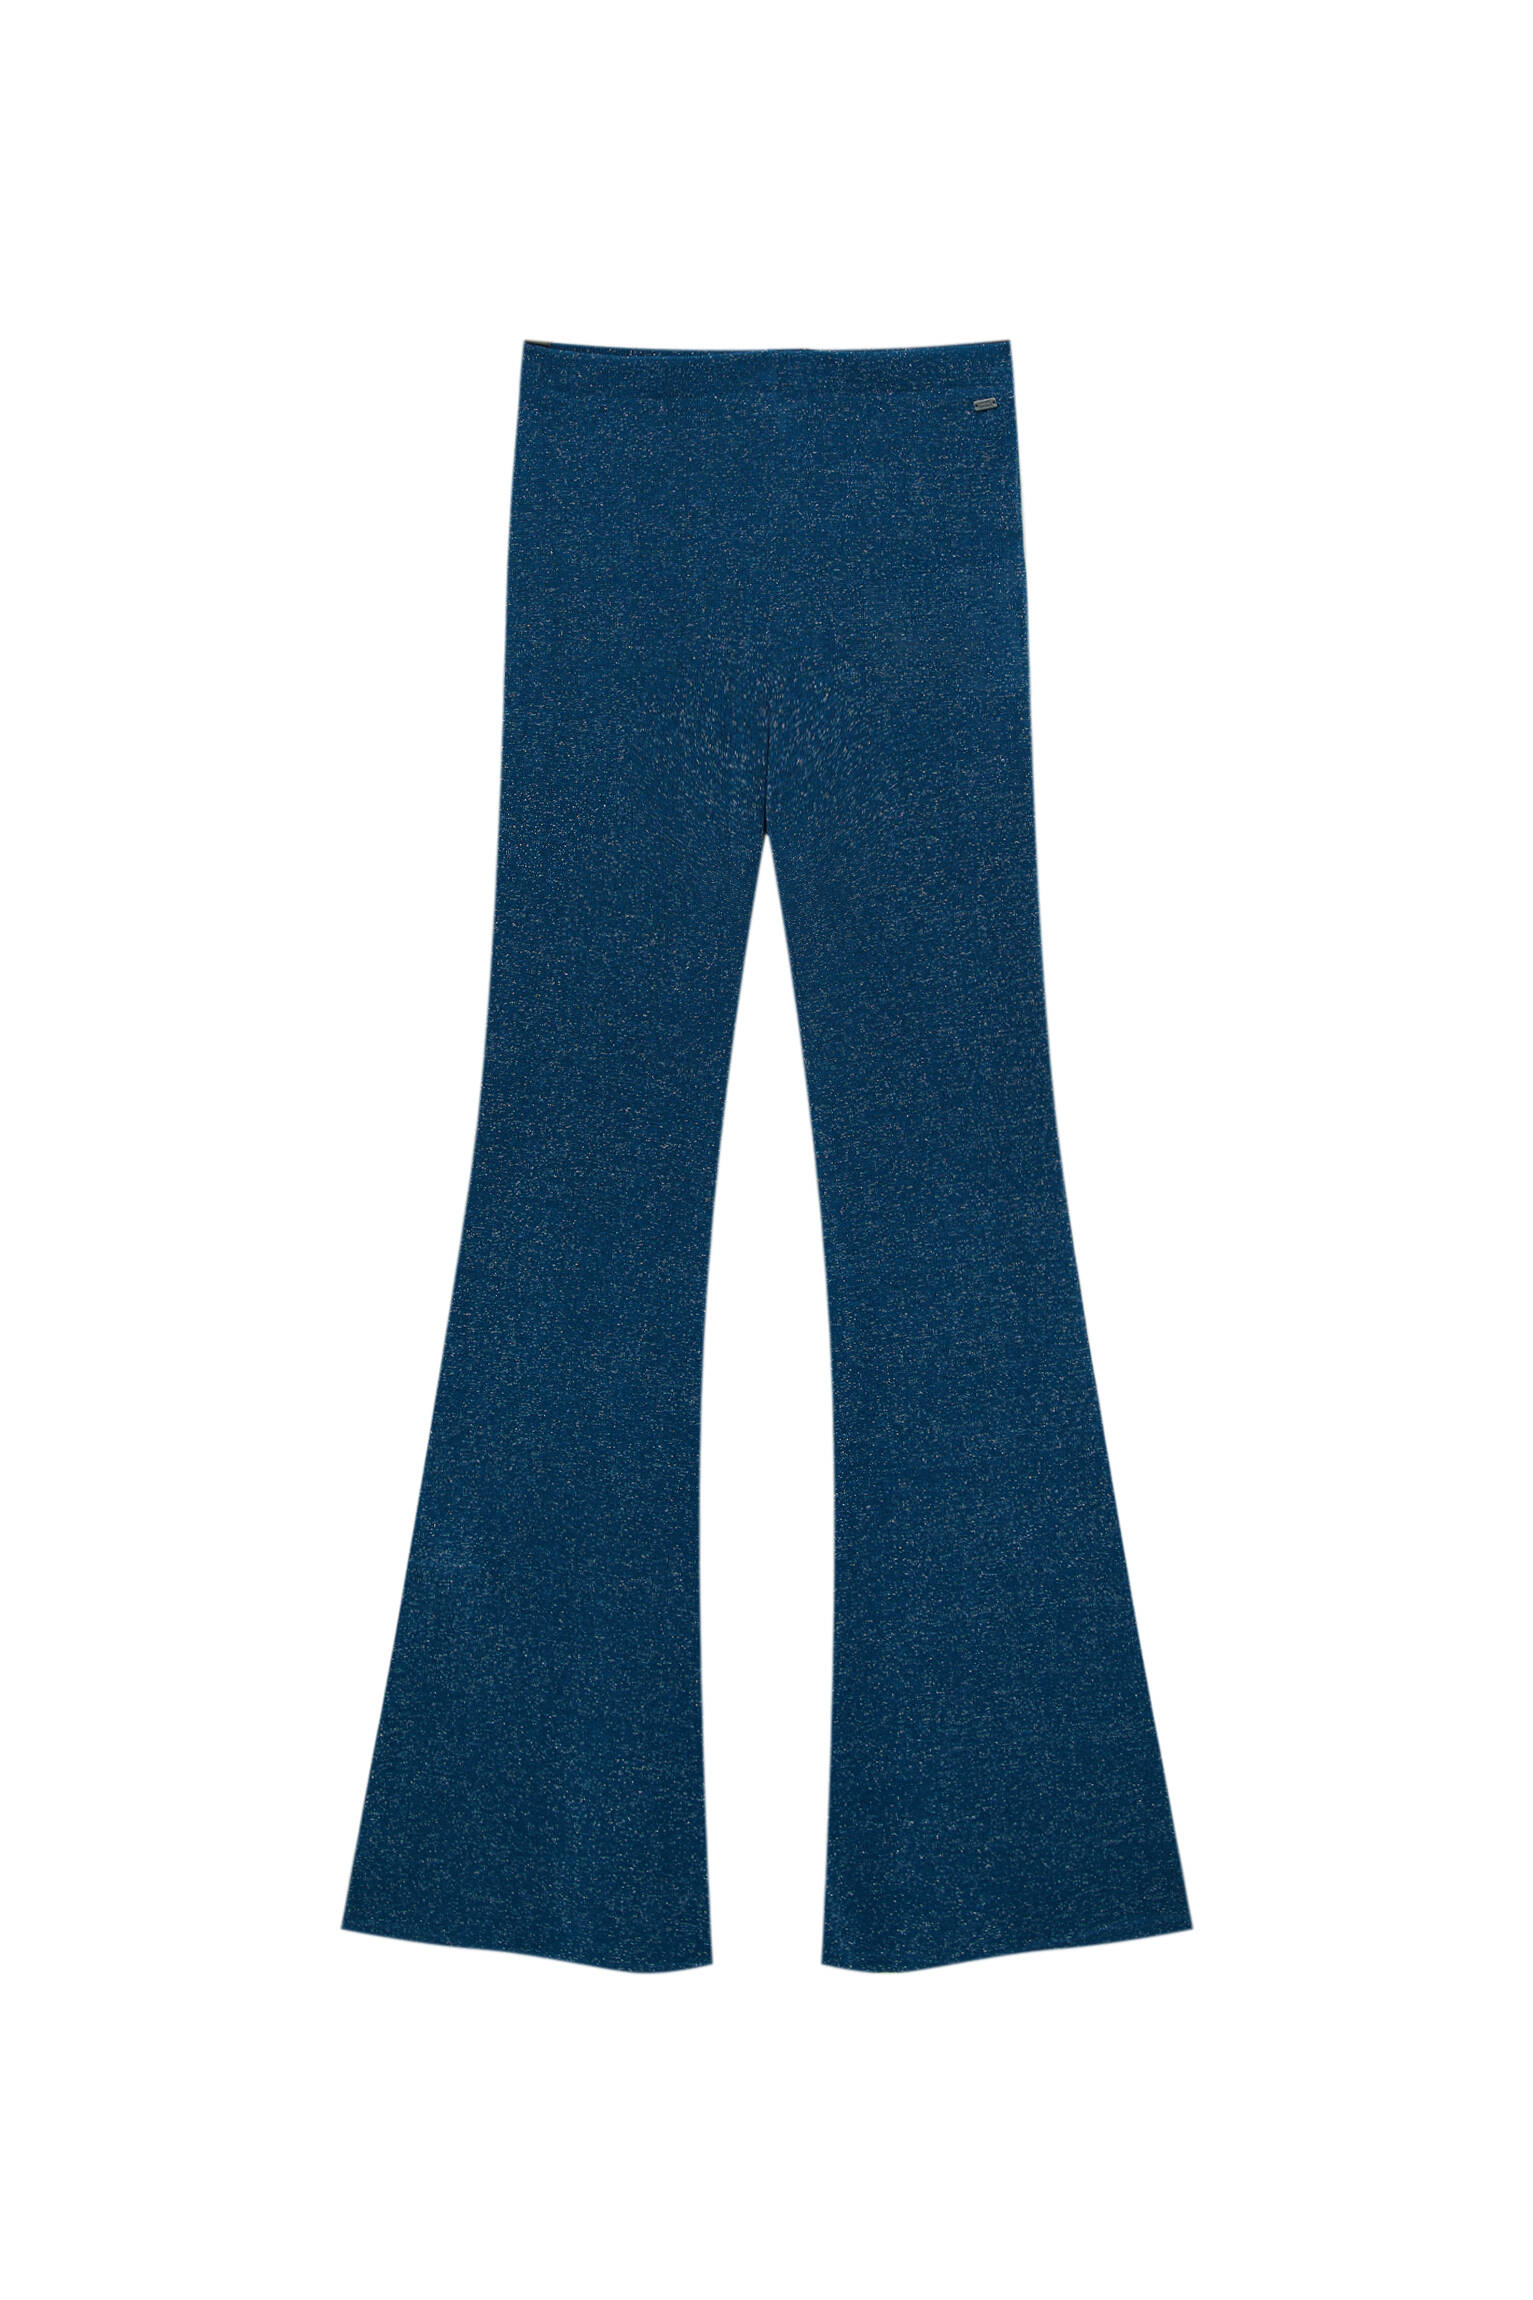 Pull&bear Femme Pantalon évasé Bleu En Tissu Brillant Légèrement Extensible. Bleu Acier Xs